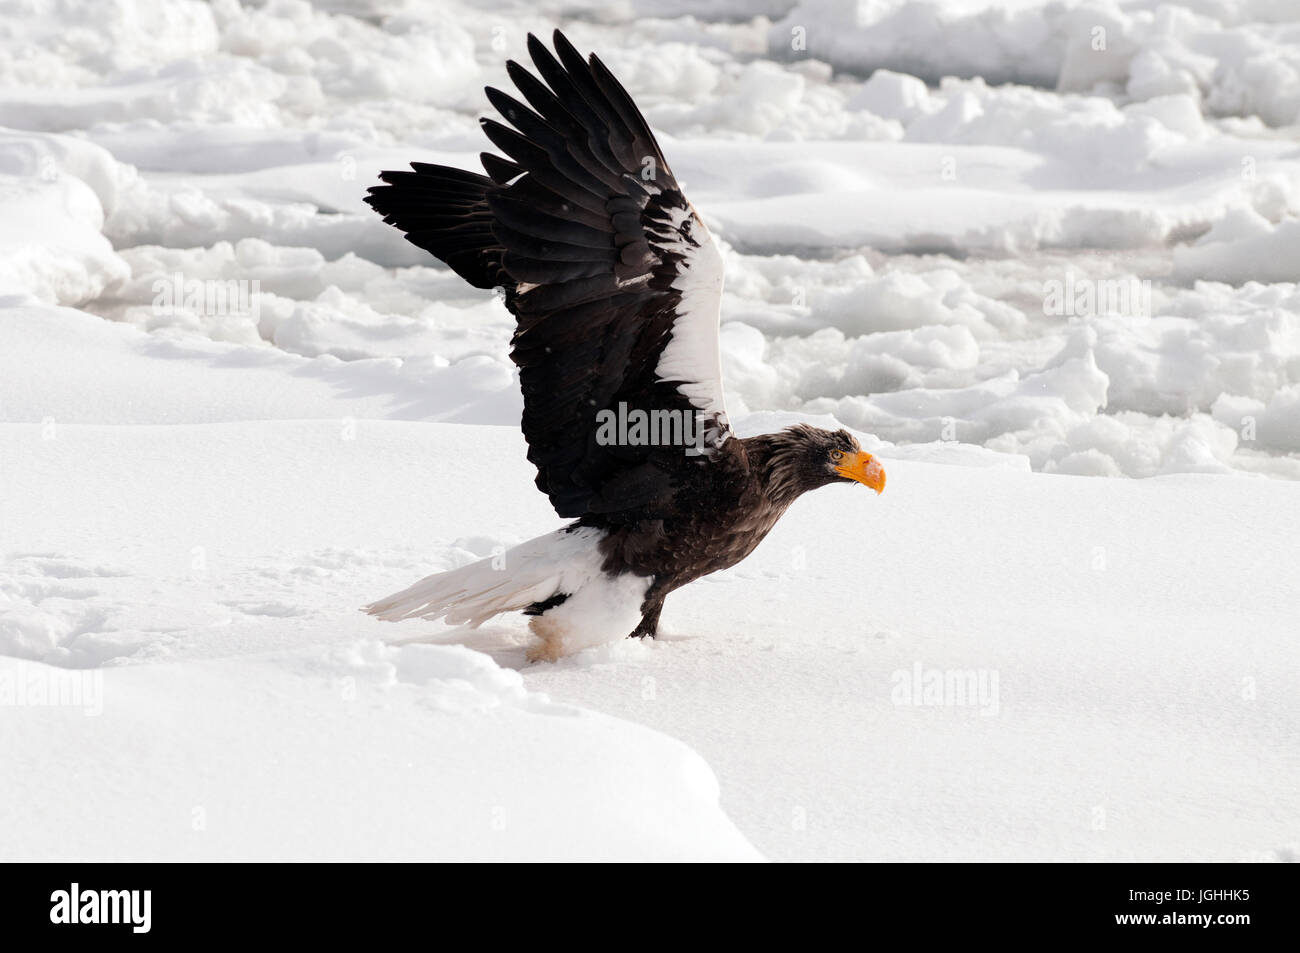 Steller's sea eagle (Haliaeetus pelagicus) take-off, Russia Steller's sea eagle, Haliaeetus pelagicus, (Pygargue de Steller) Russia, 2017 Stock Photo